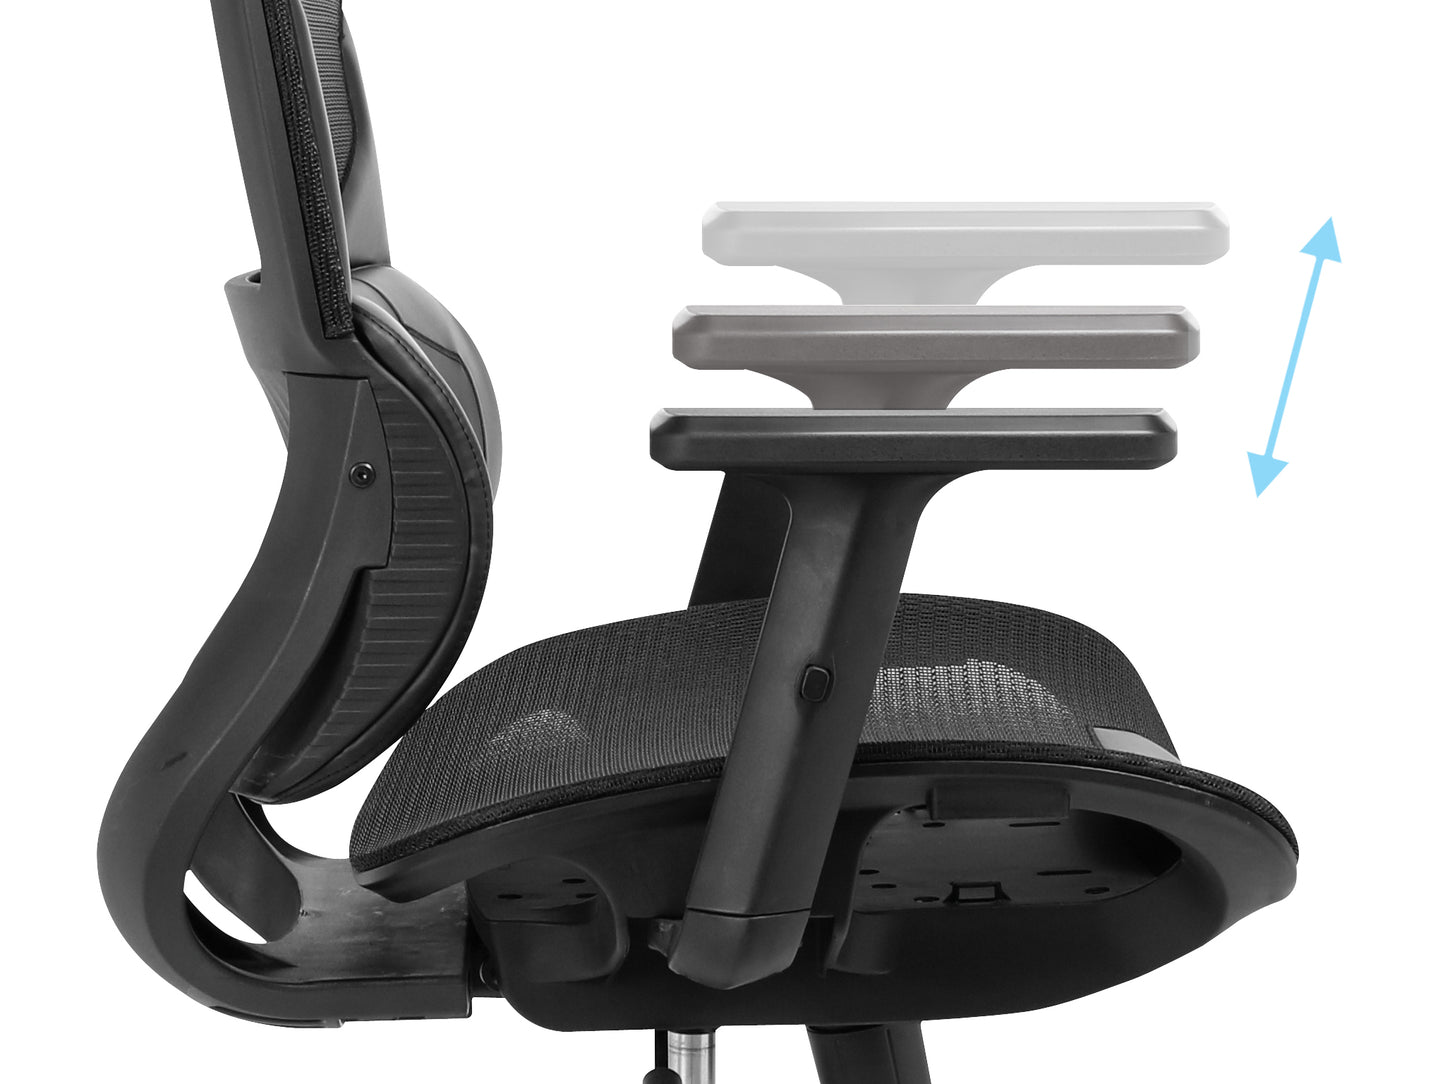 Sandberg 640-95 ErgoFusion Gaming Chair